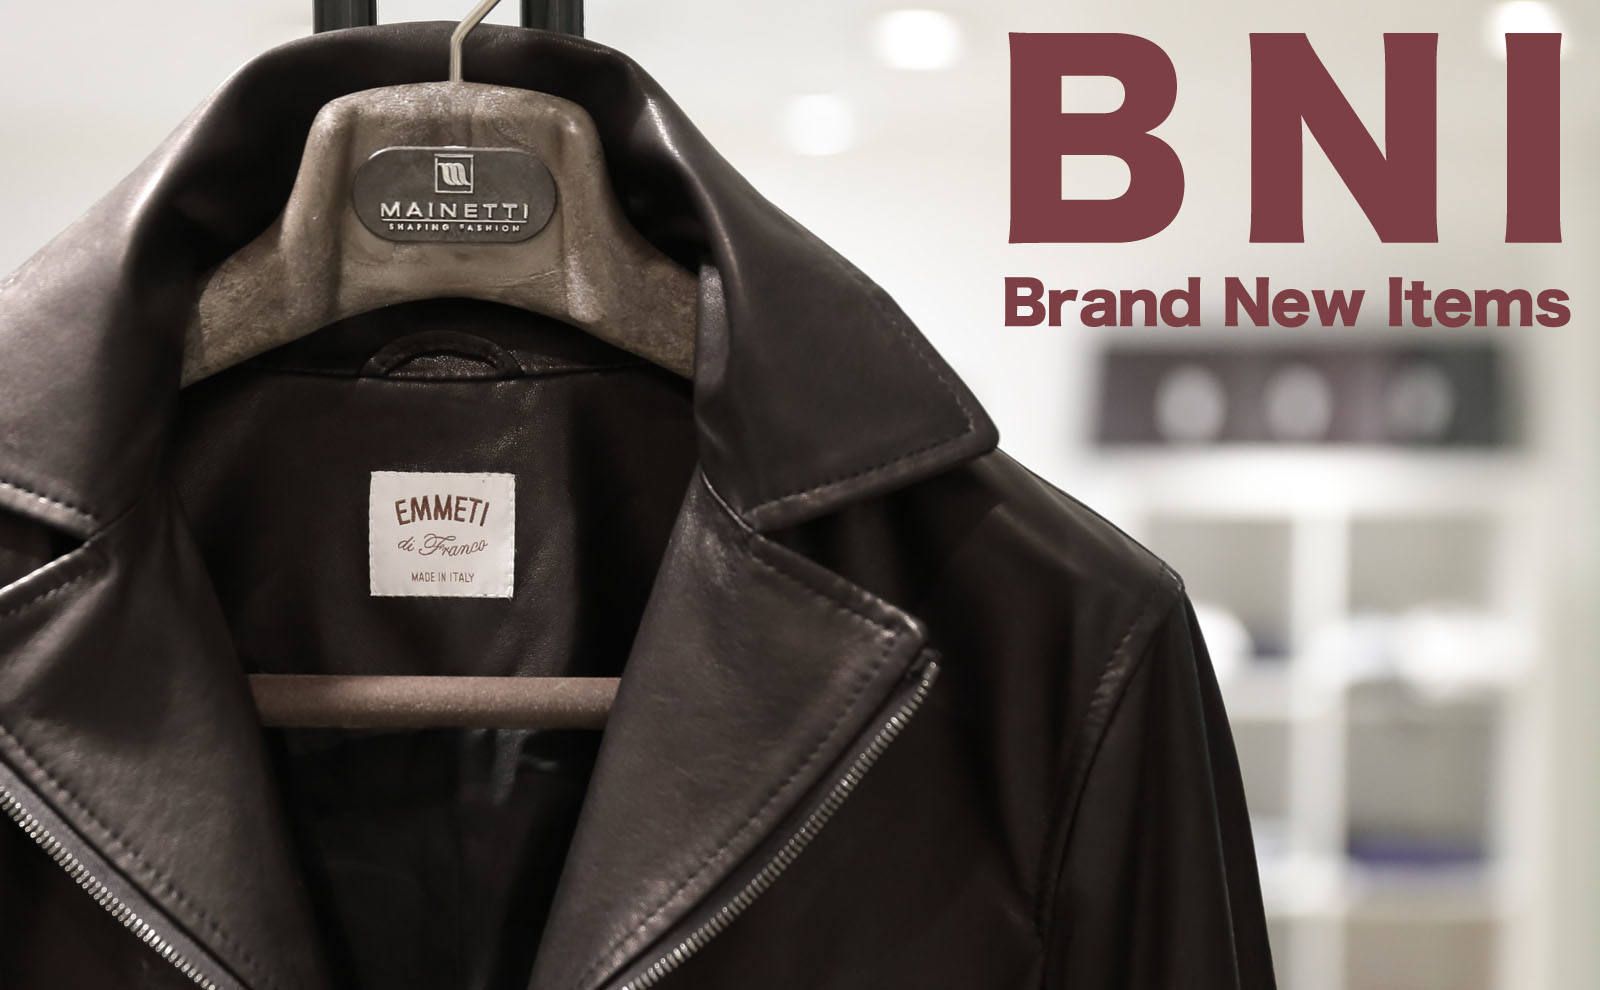 BNI - Brand New Items 